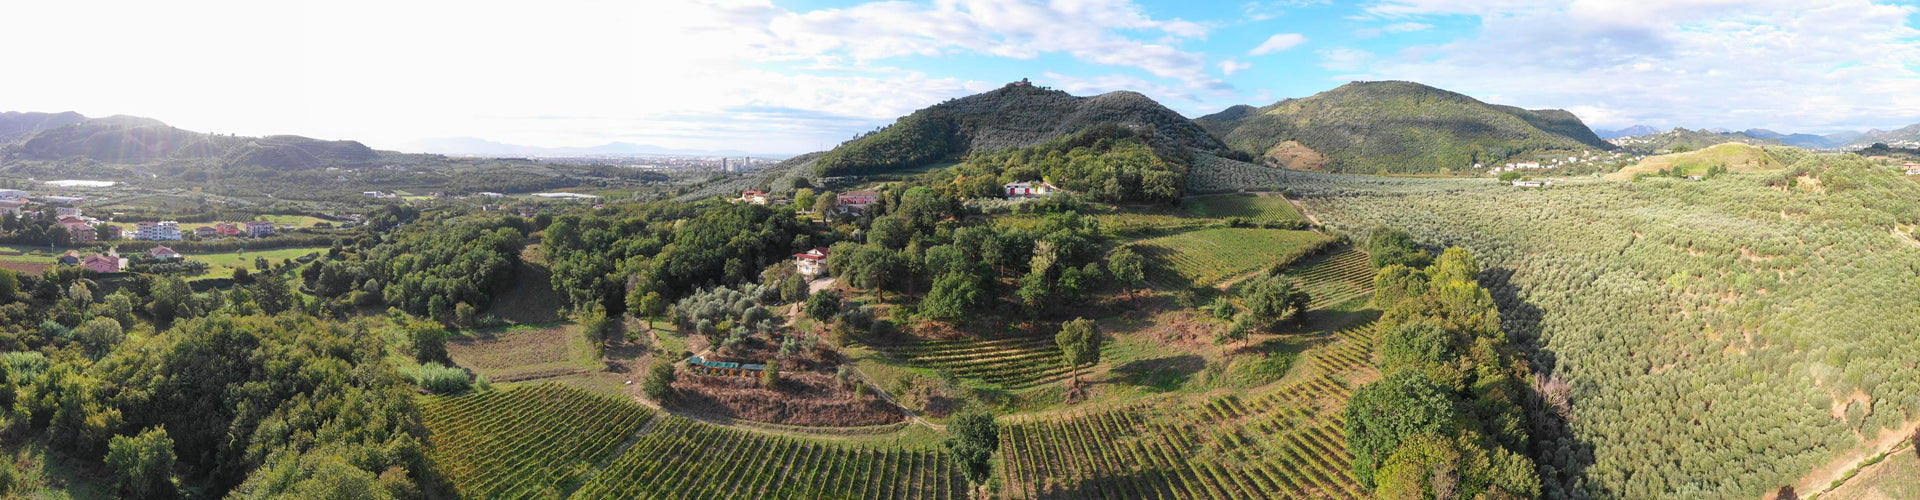 Montevetrano Estate and Vineyards in Campania, Italy